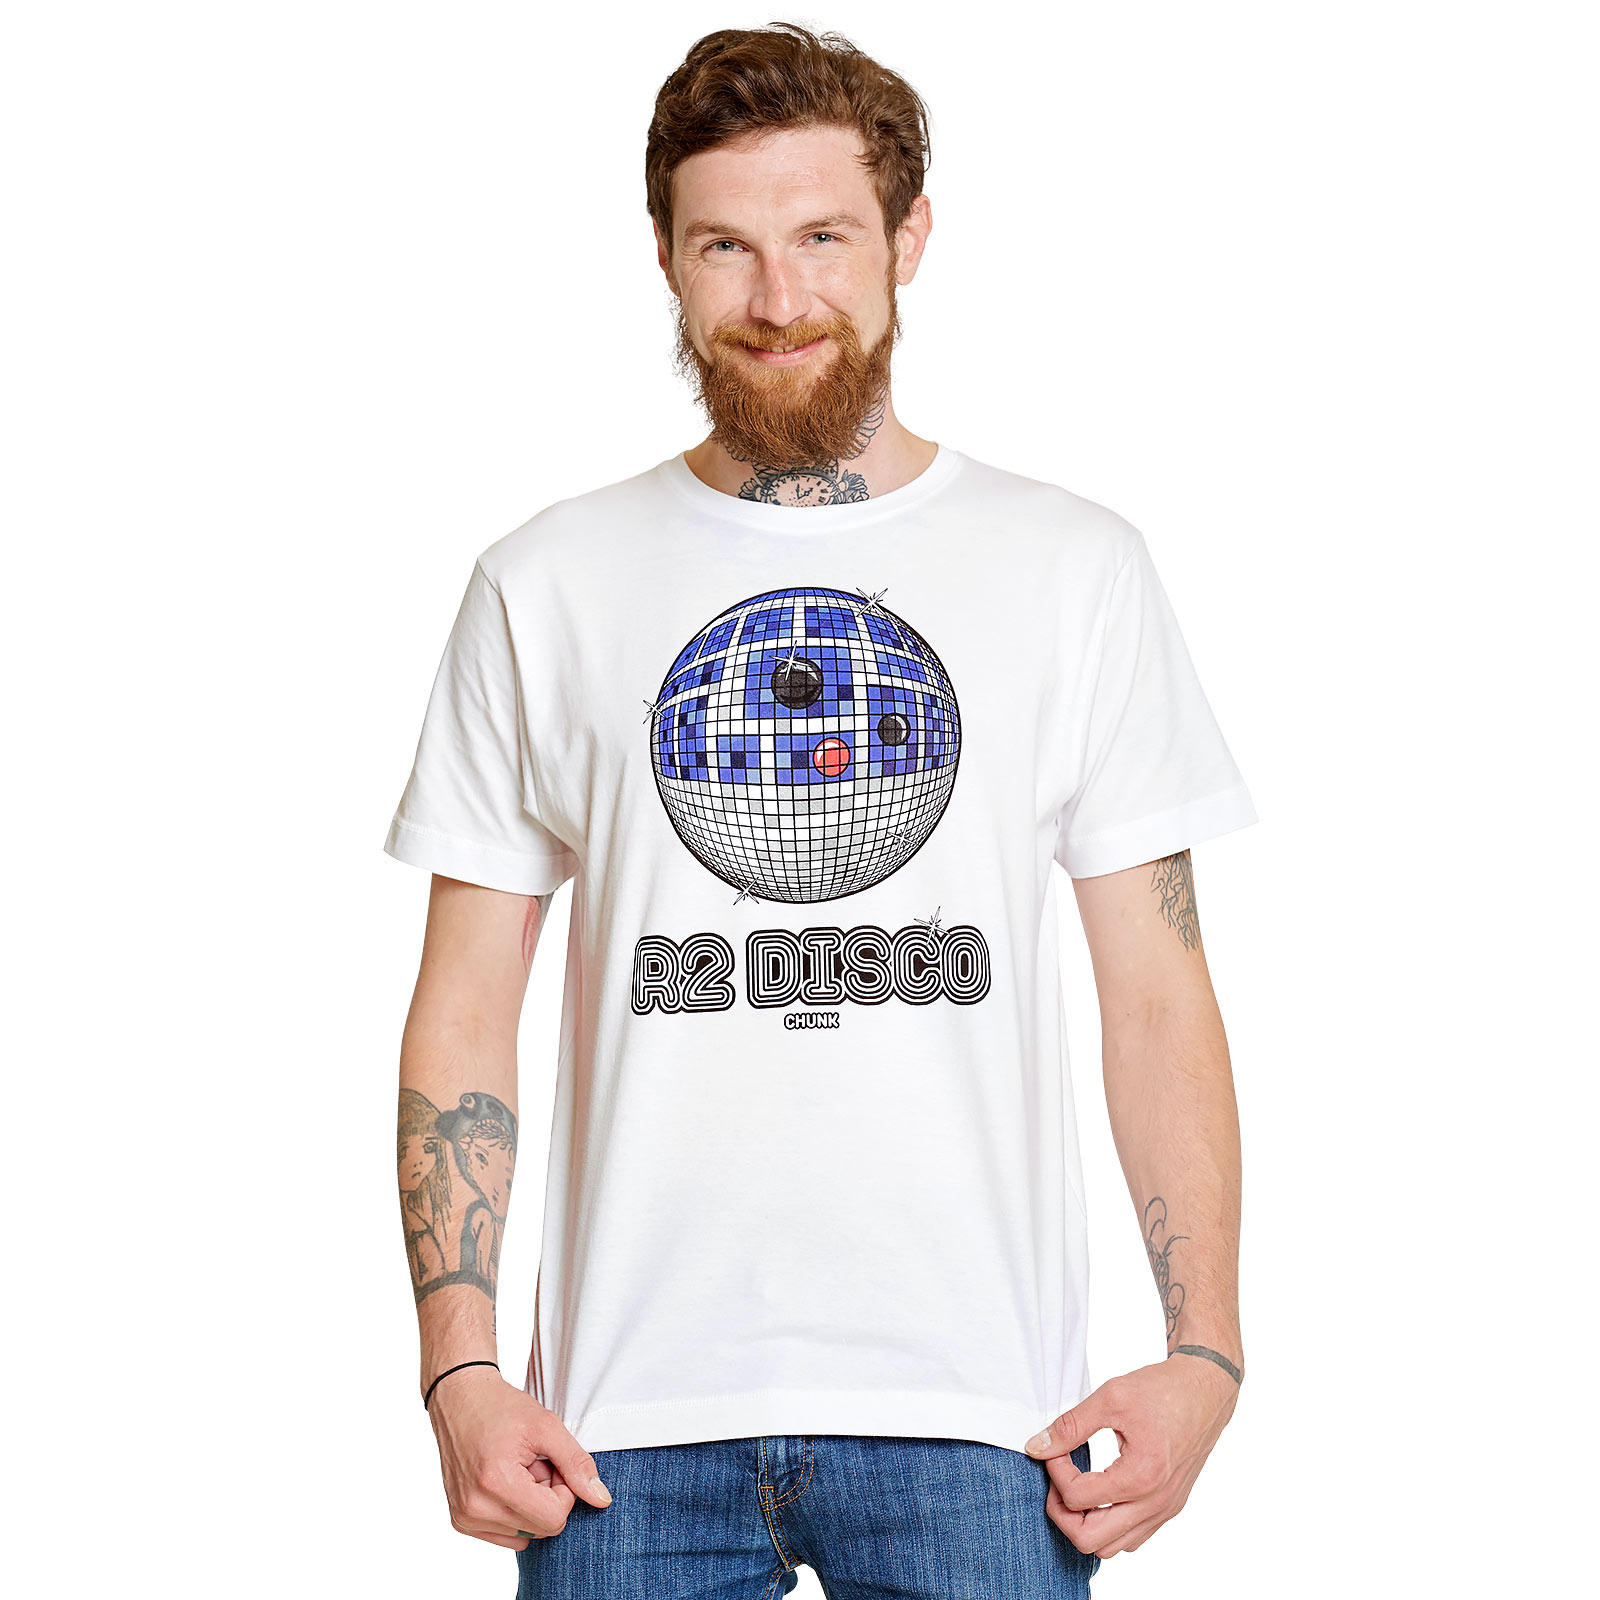 Droid Disco T-Shirt voor Star Wars fans wit